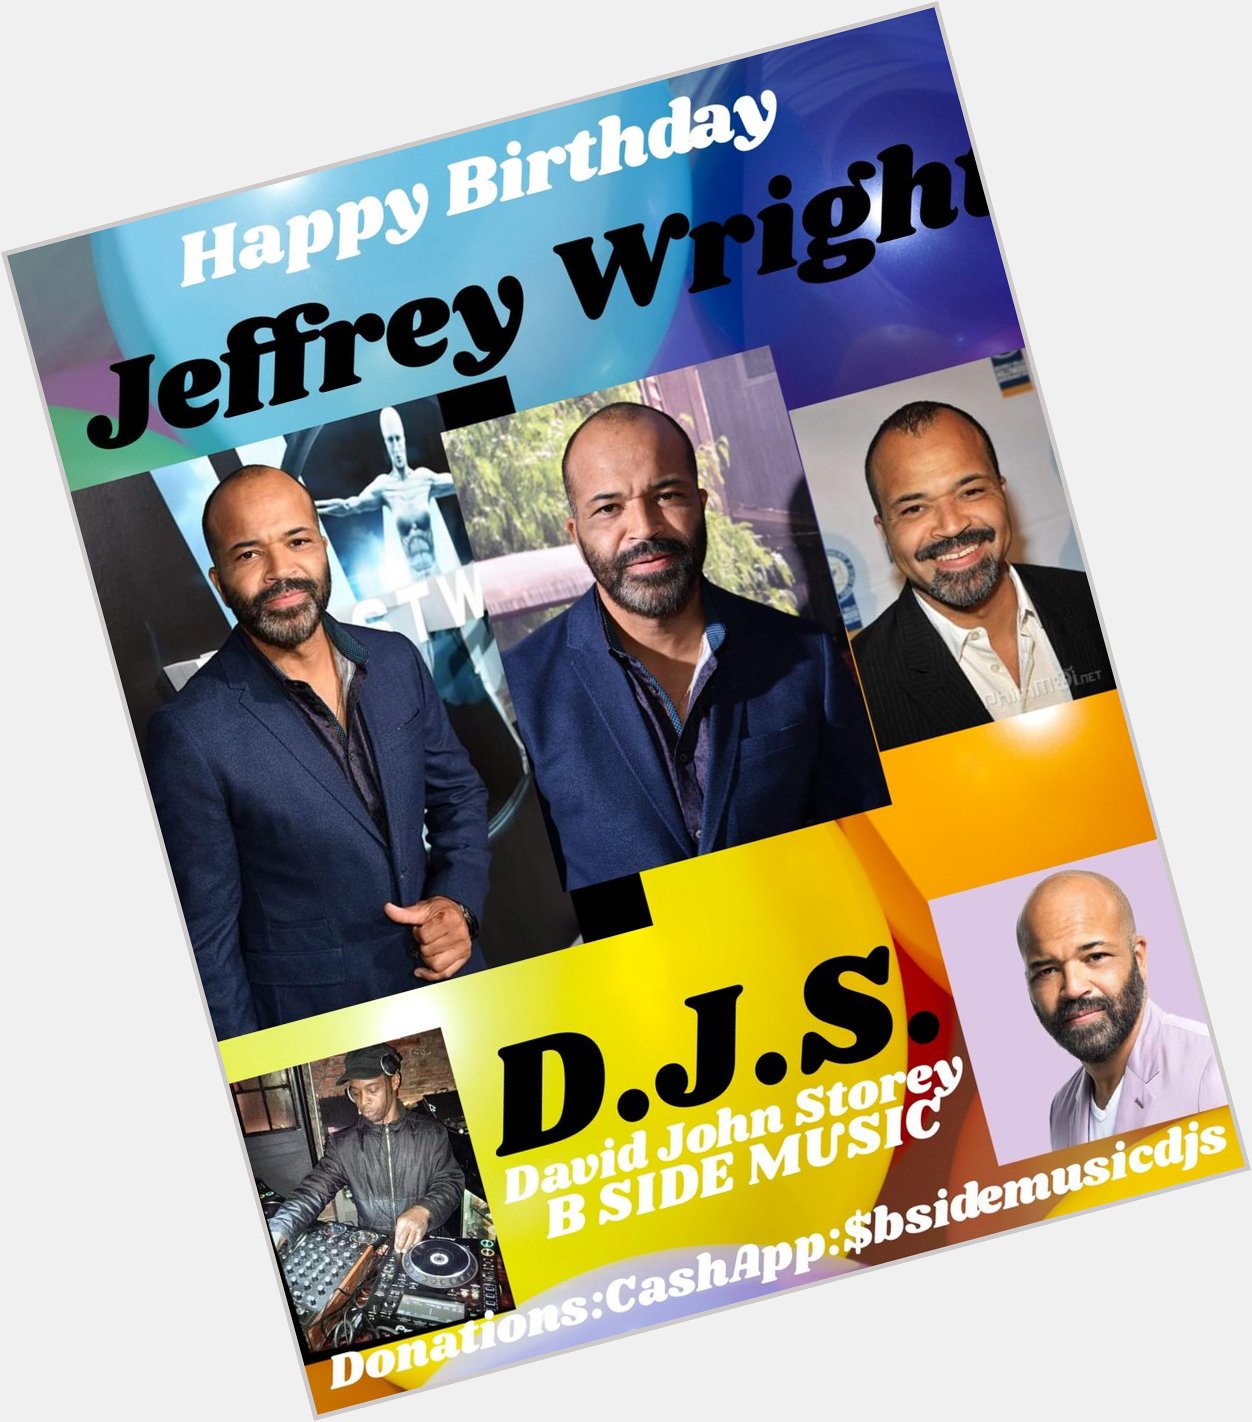 I(D.J.S.)\"B SIDE \" saying Happy Birthday to Actor \"JEFFREY WRIGHT\"!!! 